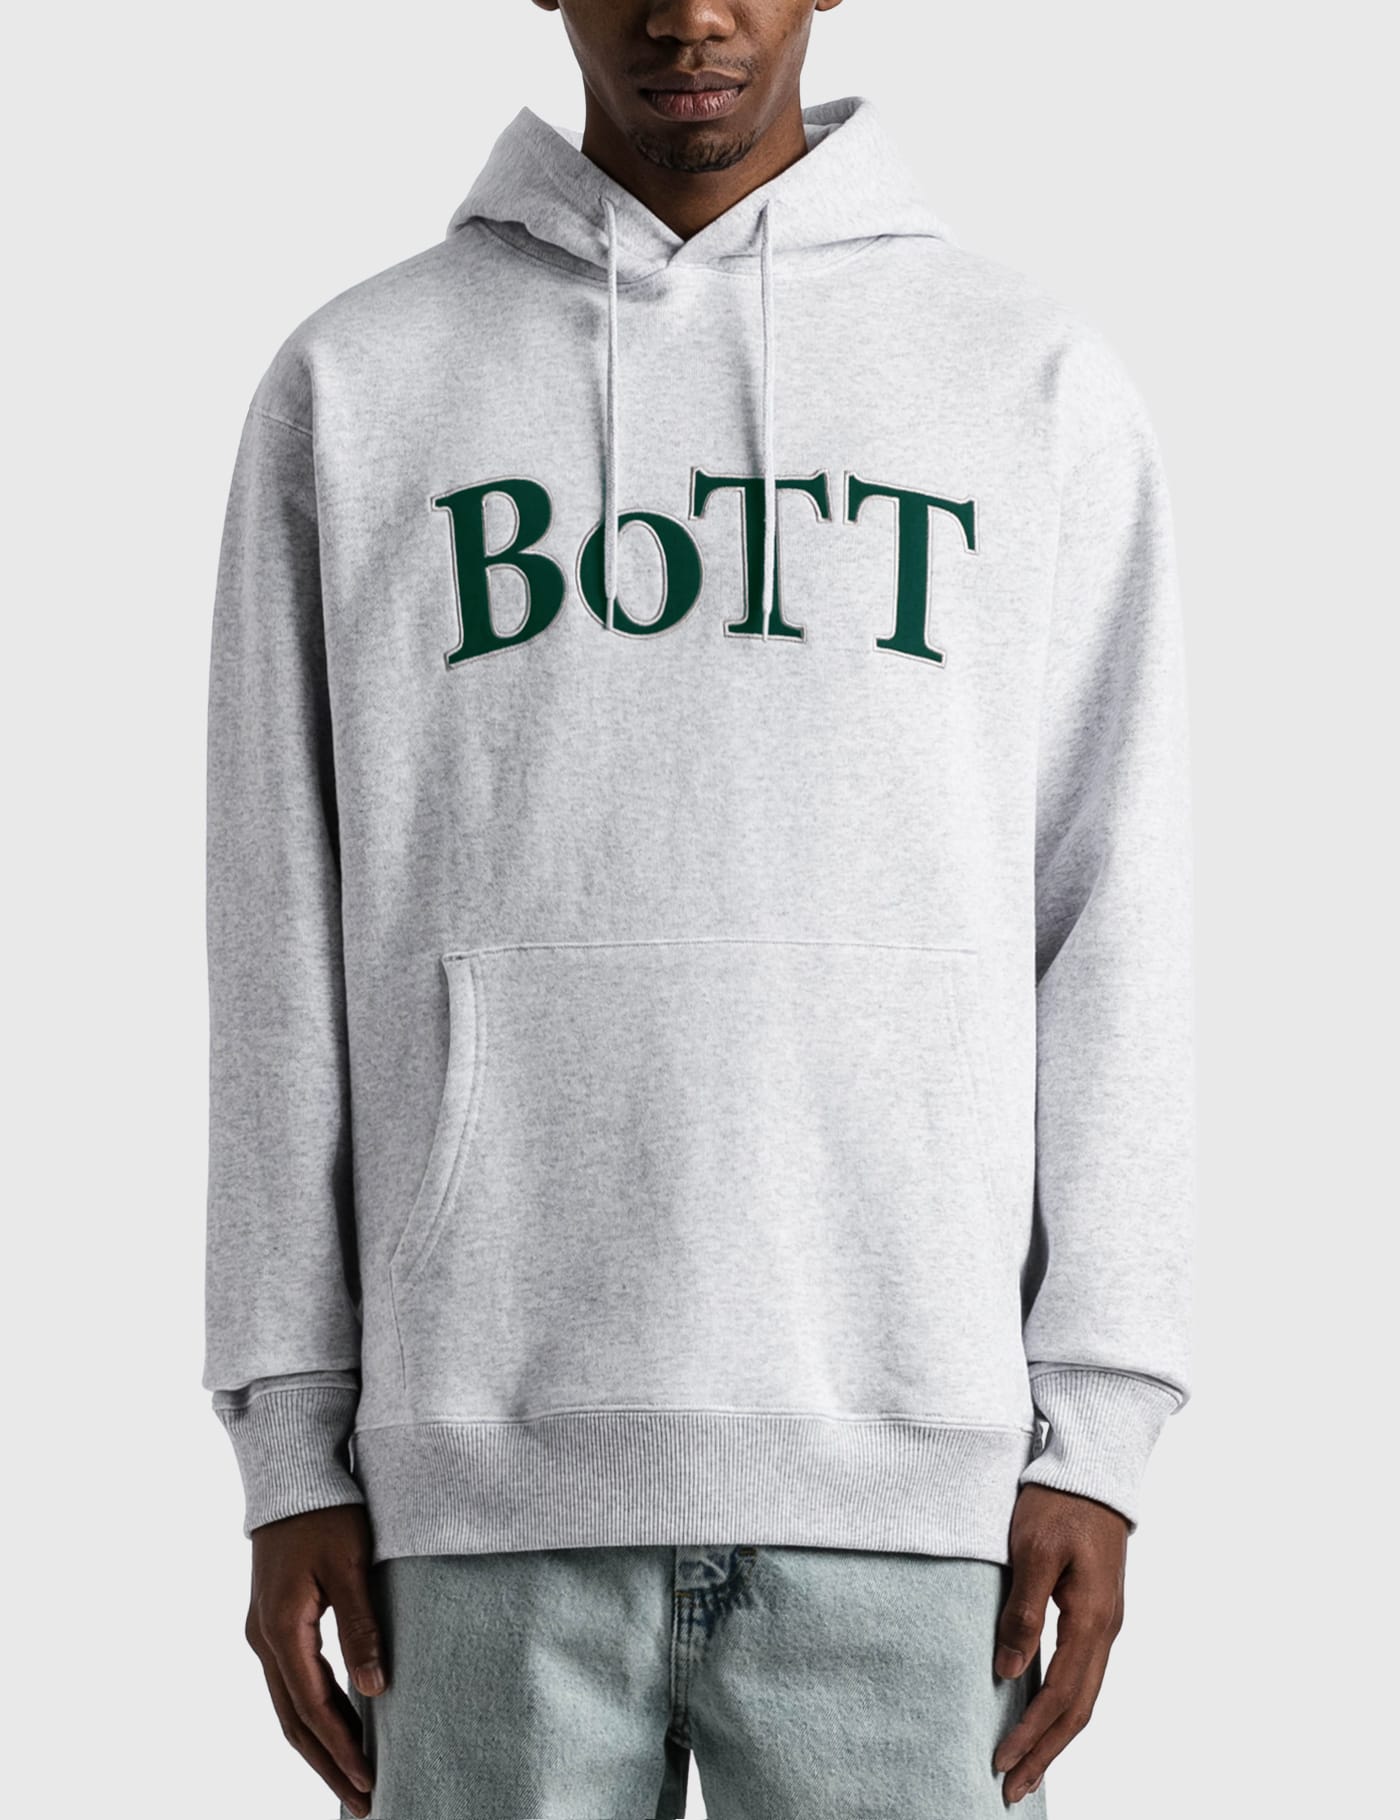 BoTT - OG Logo Hoodie | HBX - HYPEBEAST 为您搜罗全球潮流时尚品牌